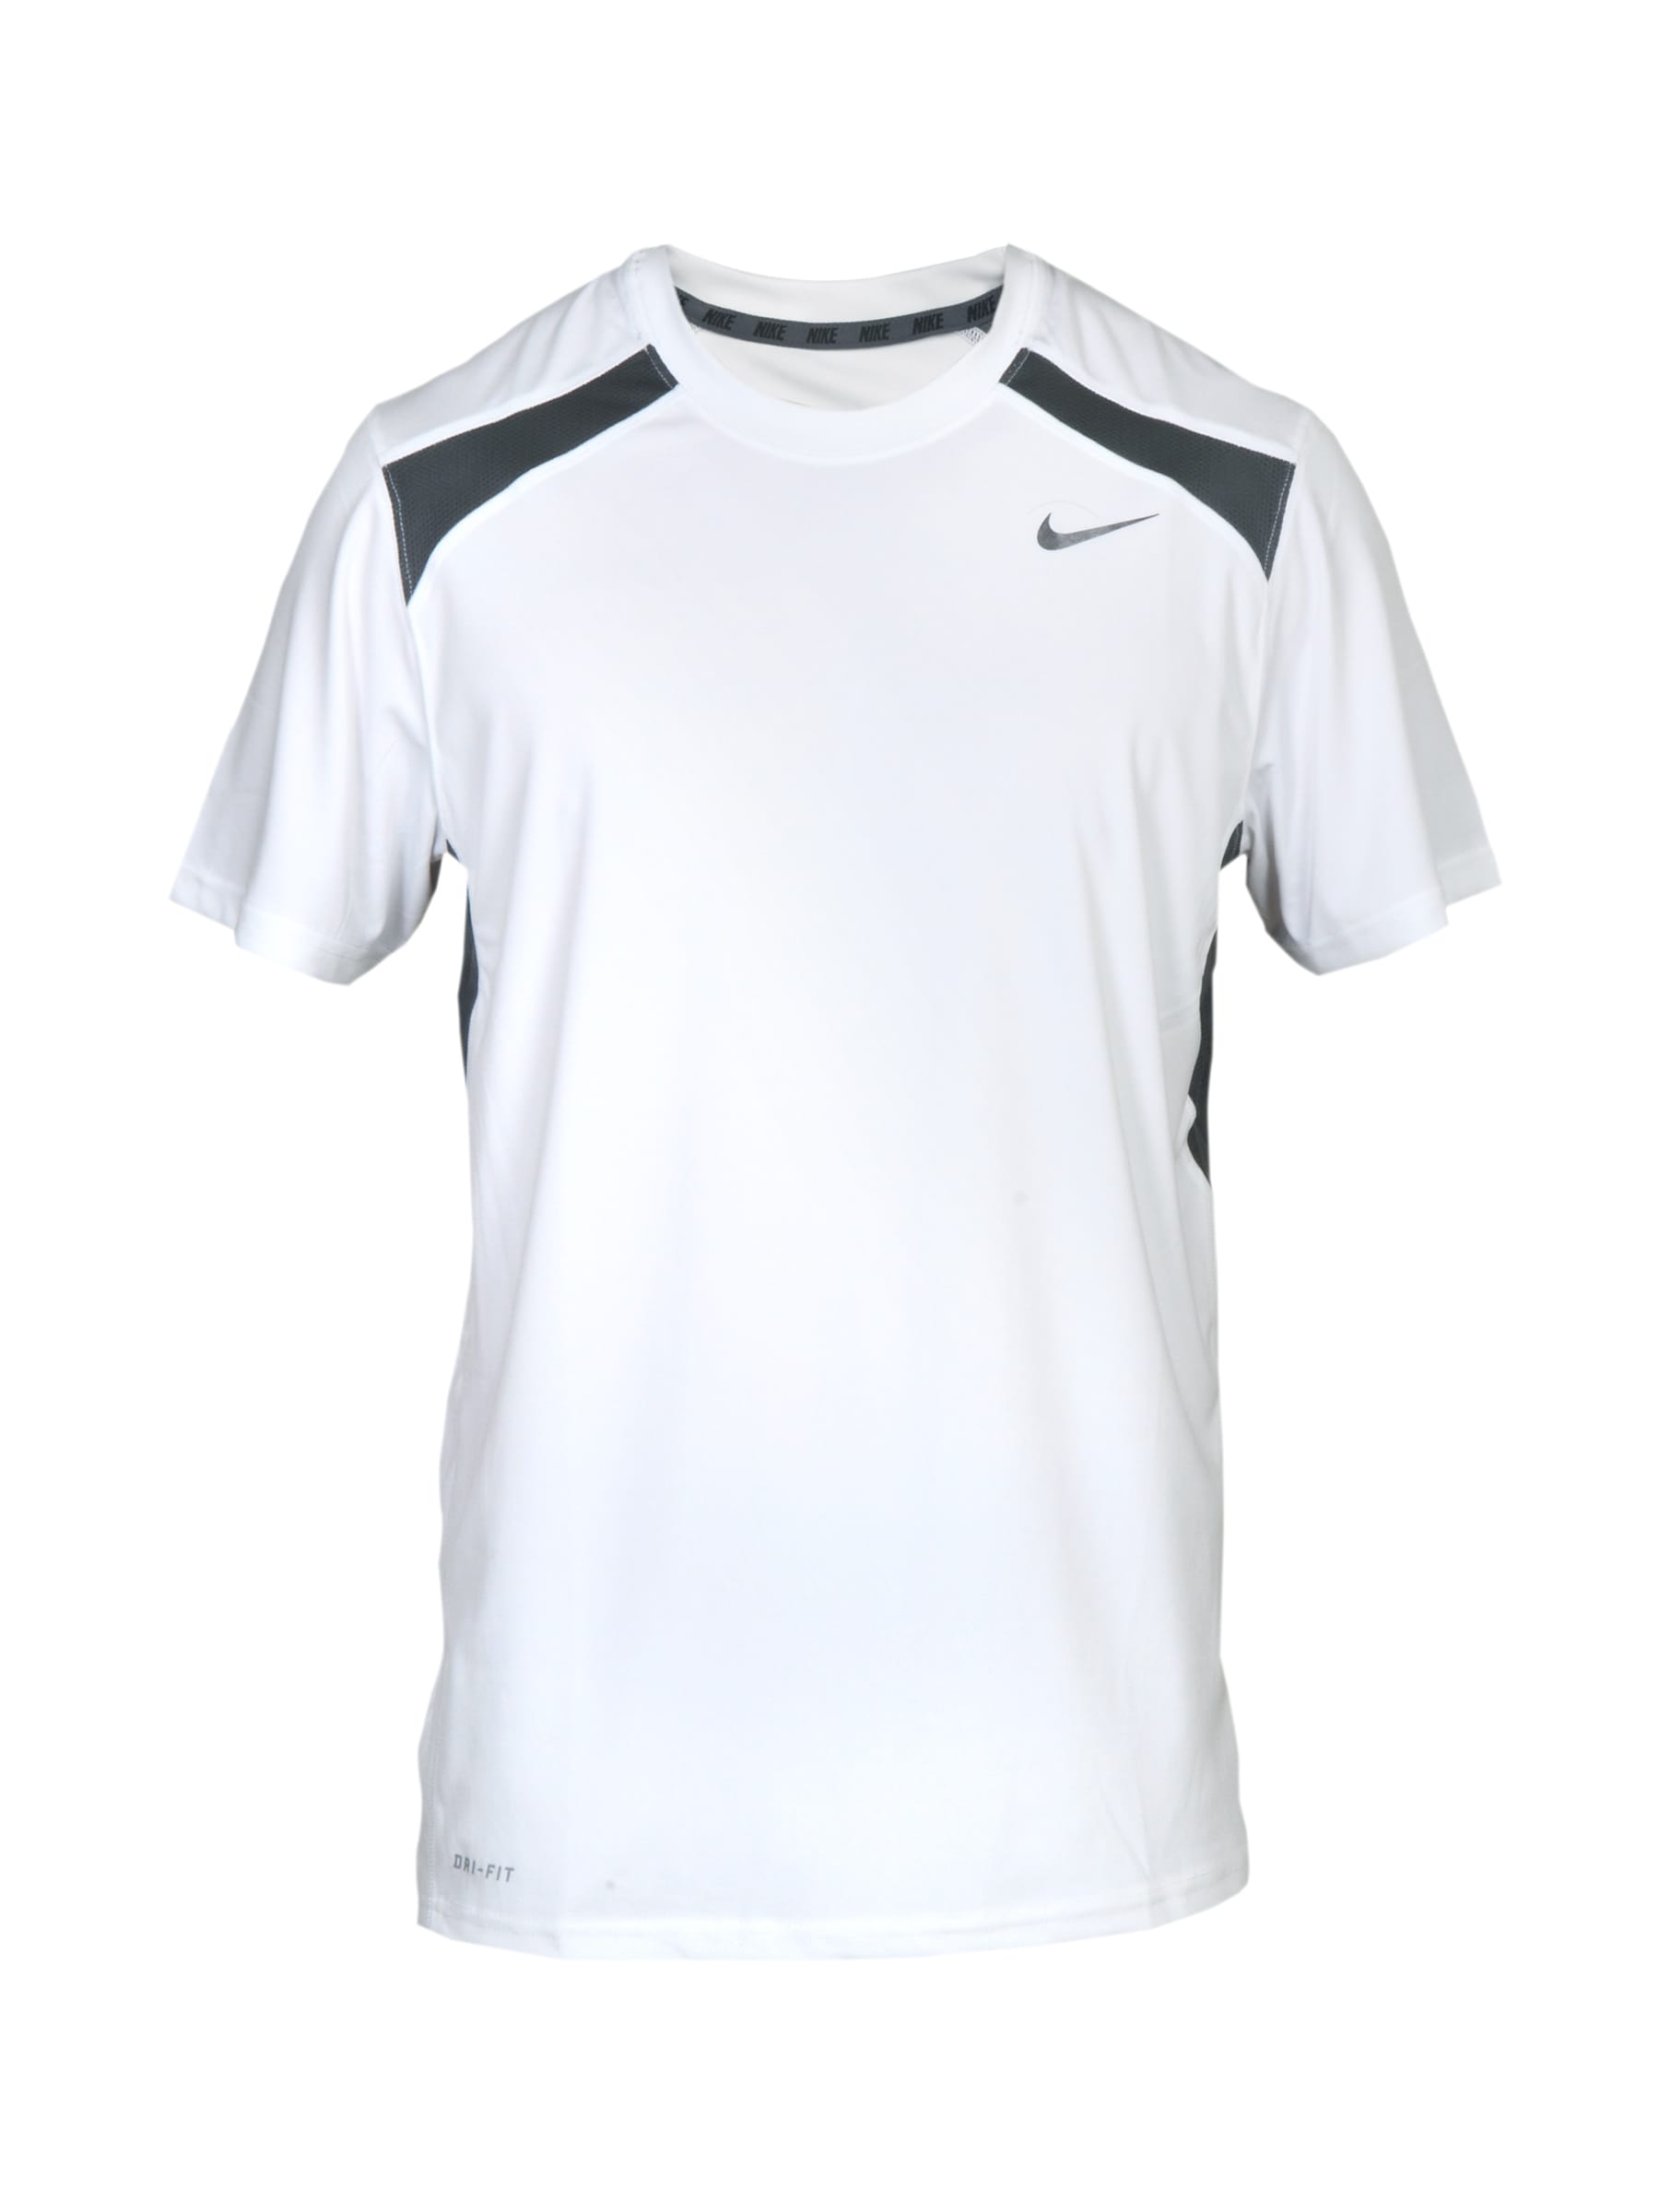 Nike Men's As Walkthrough White T-shirt